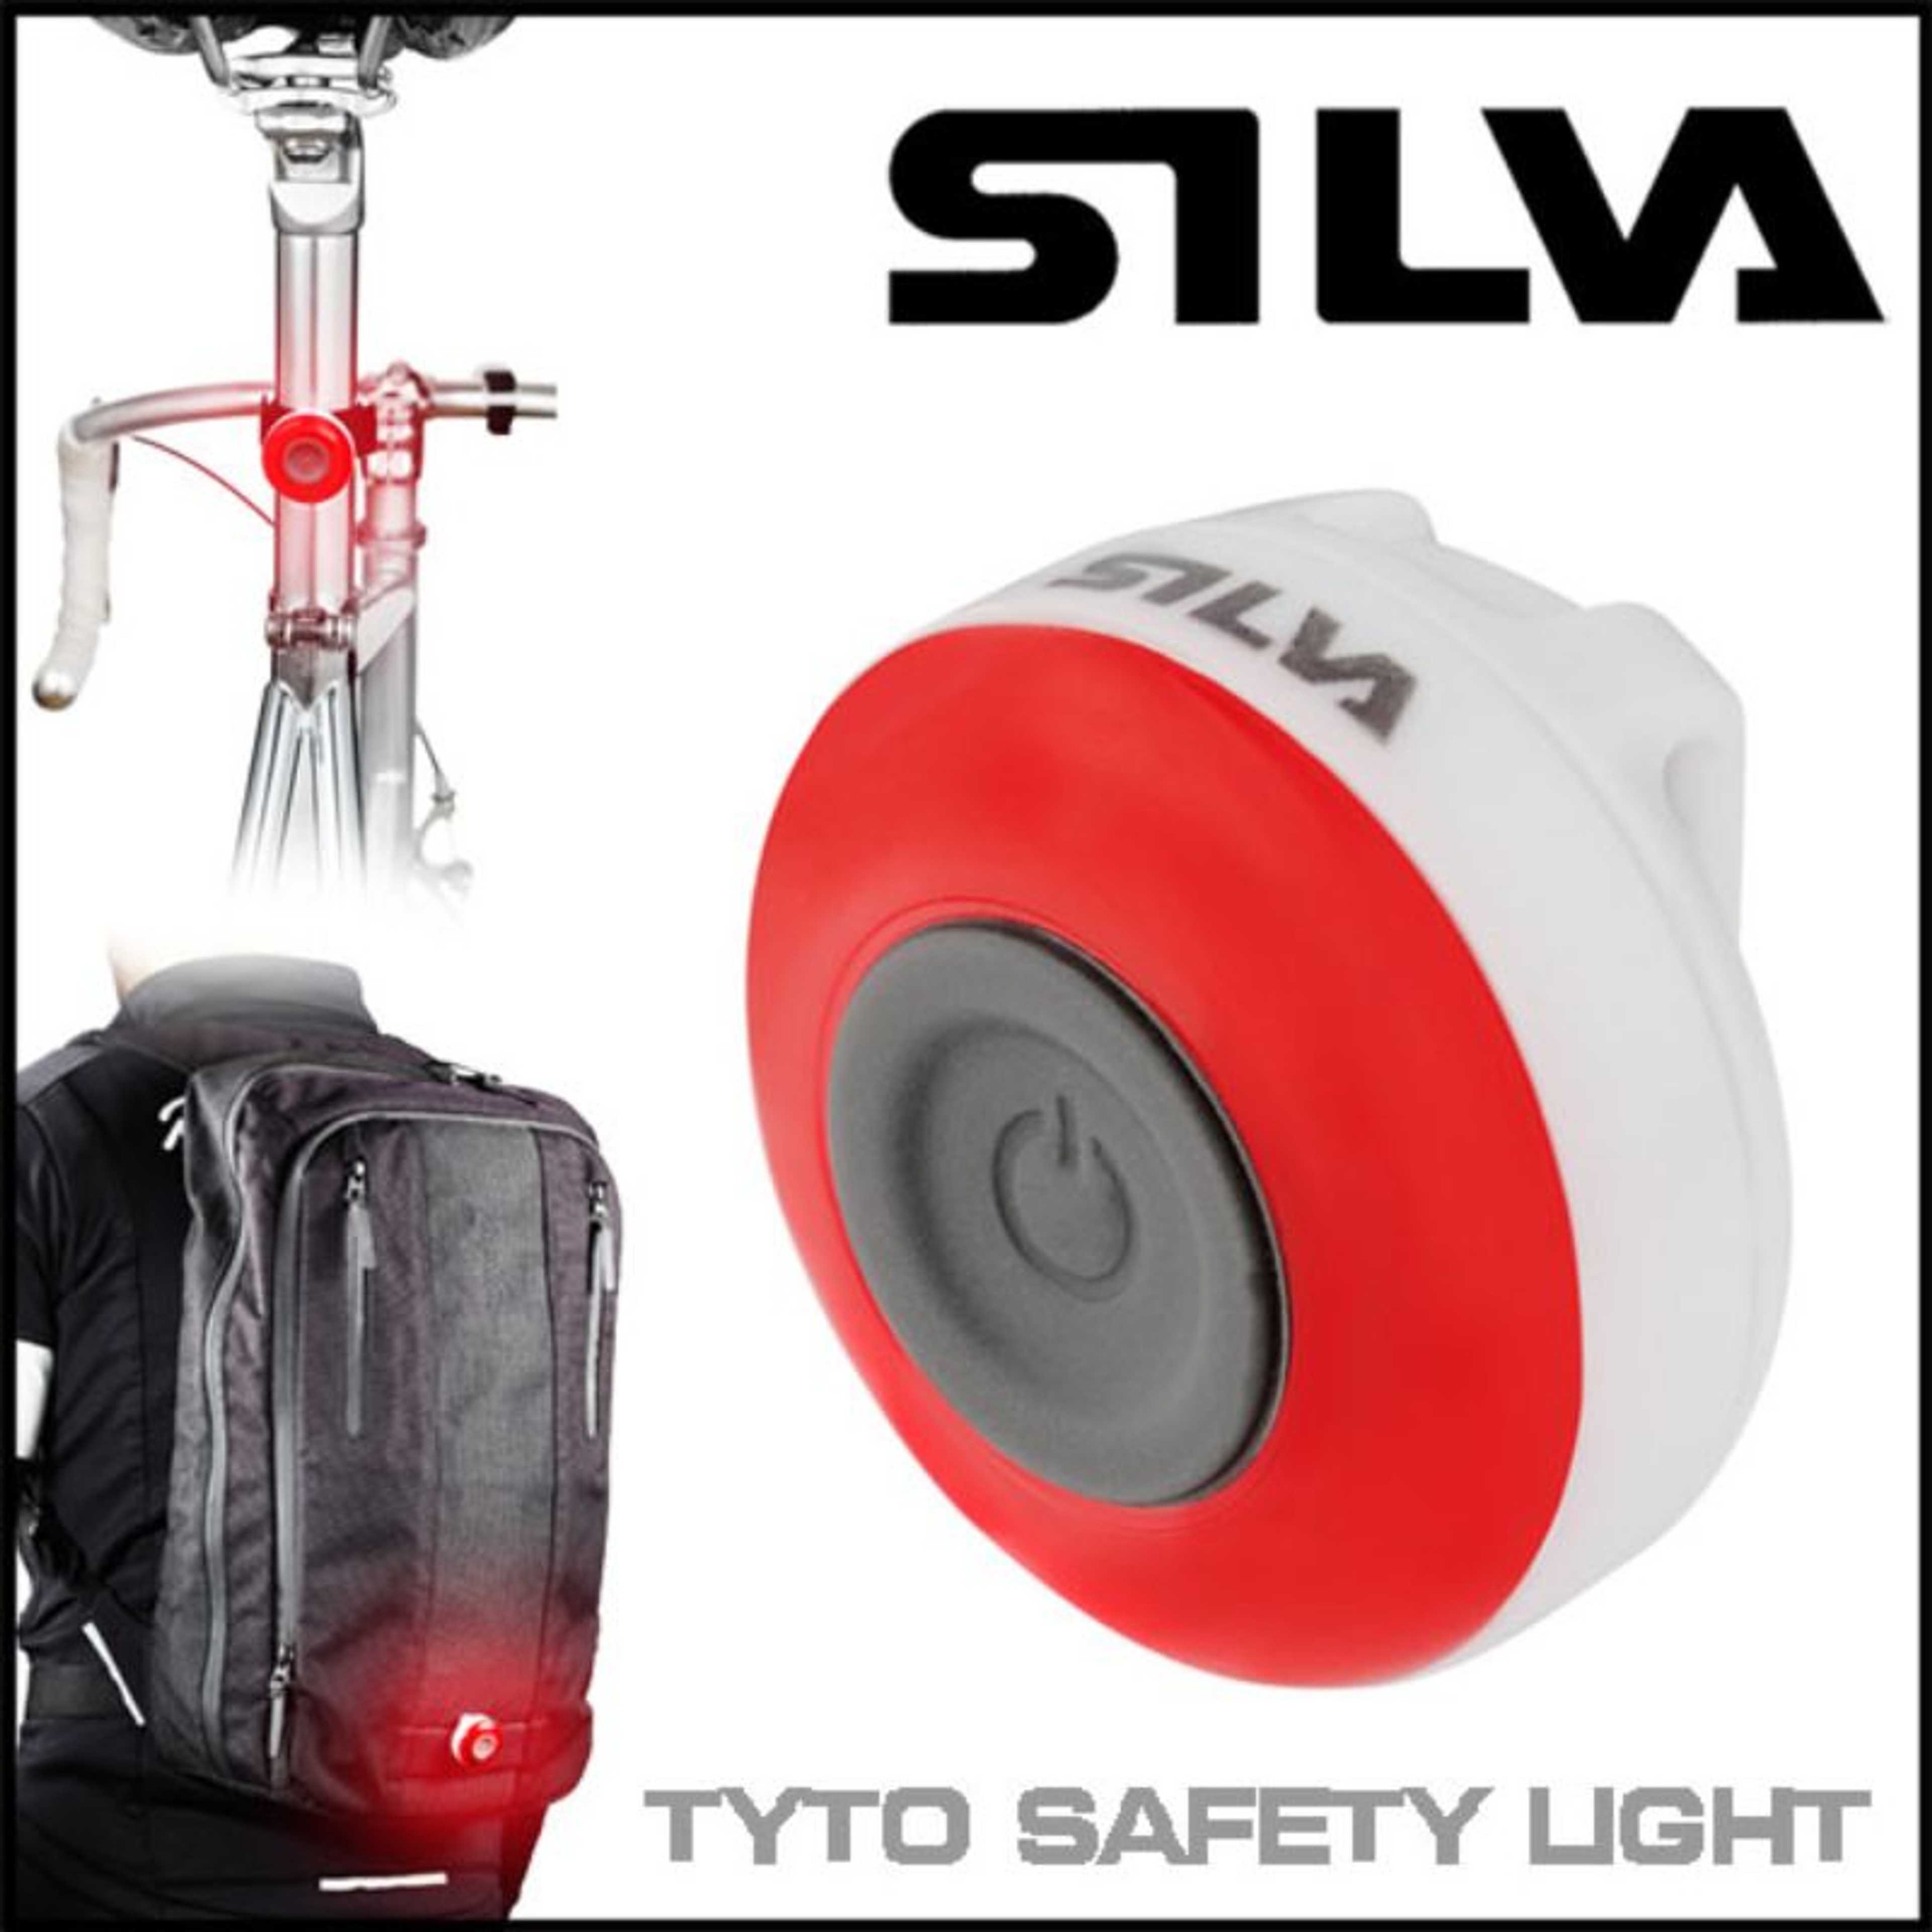 SILVA SPORT SAFETY LED LIGHT